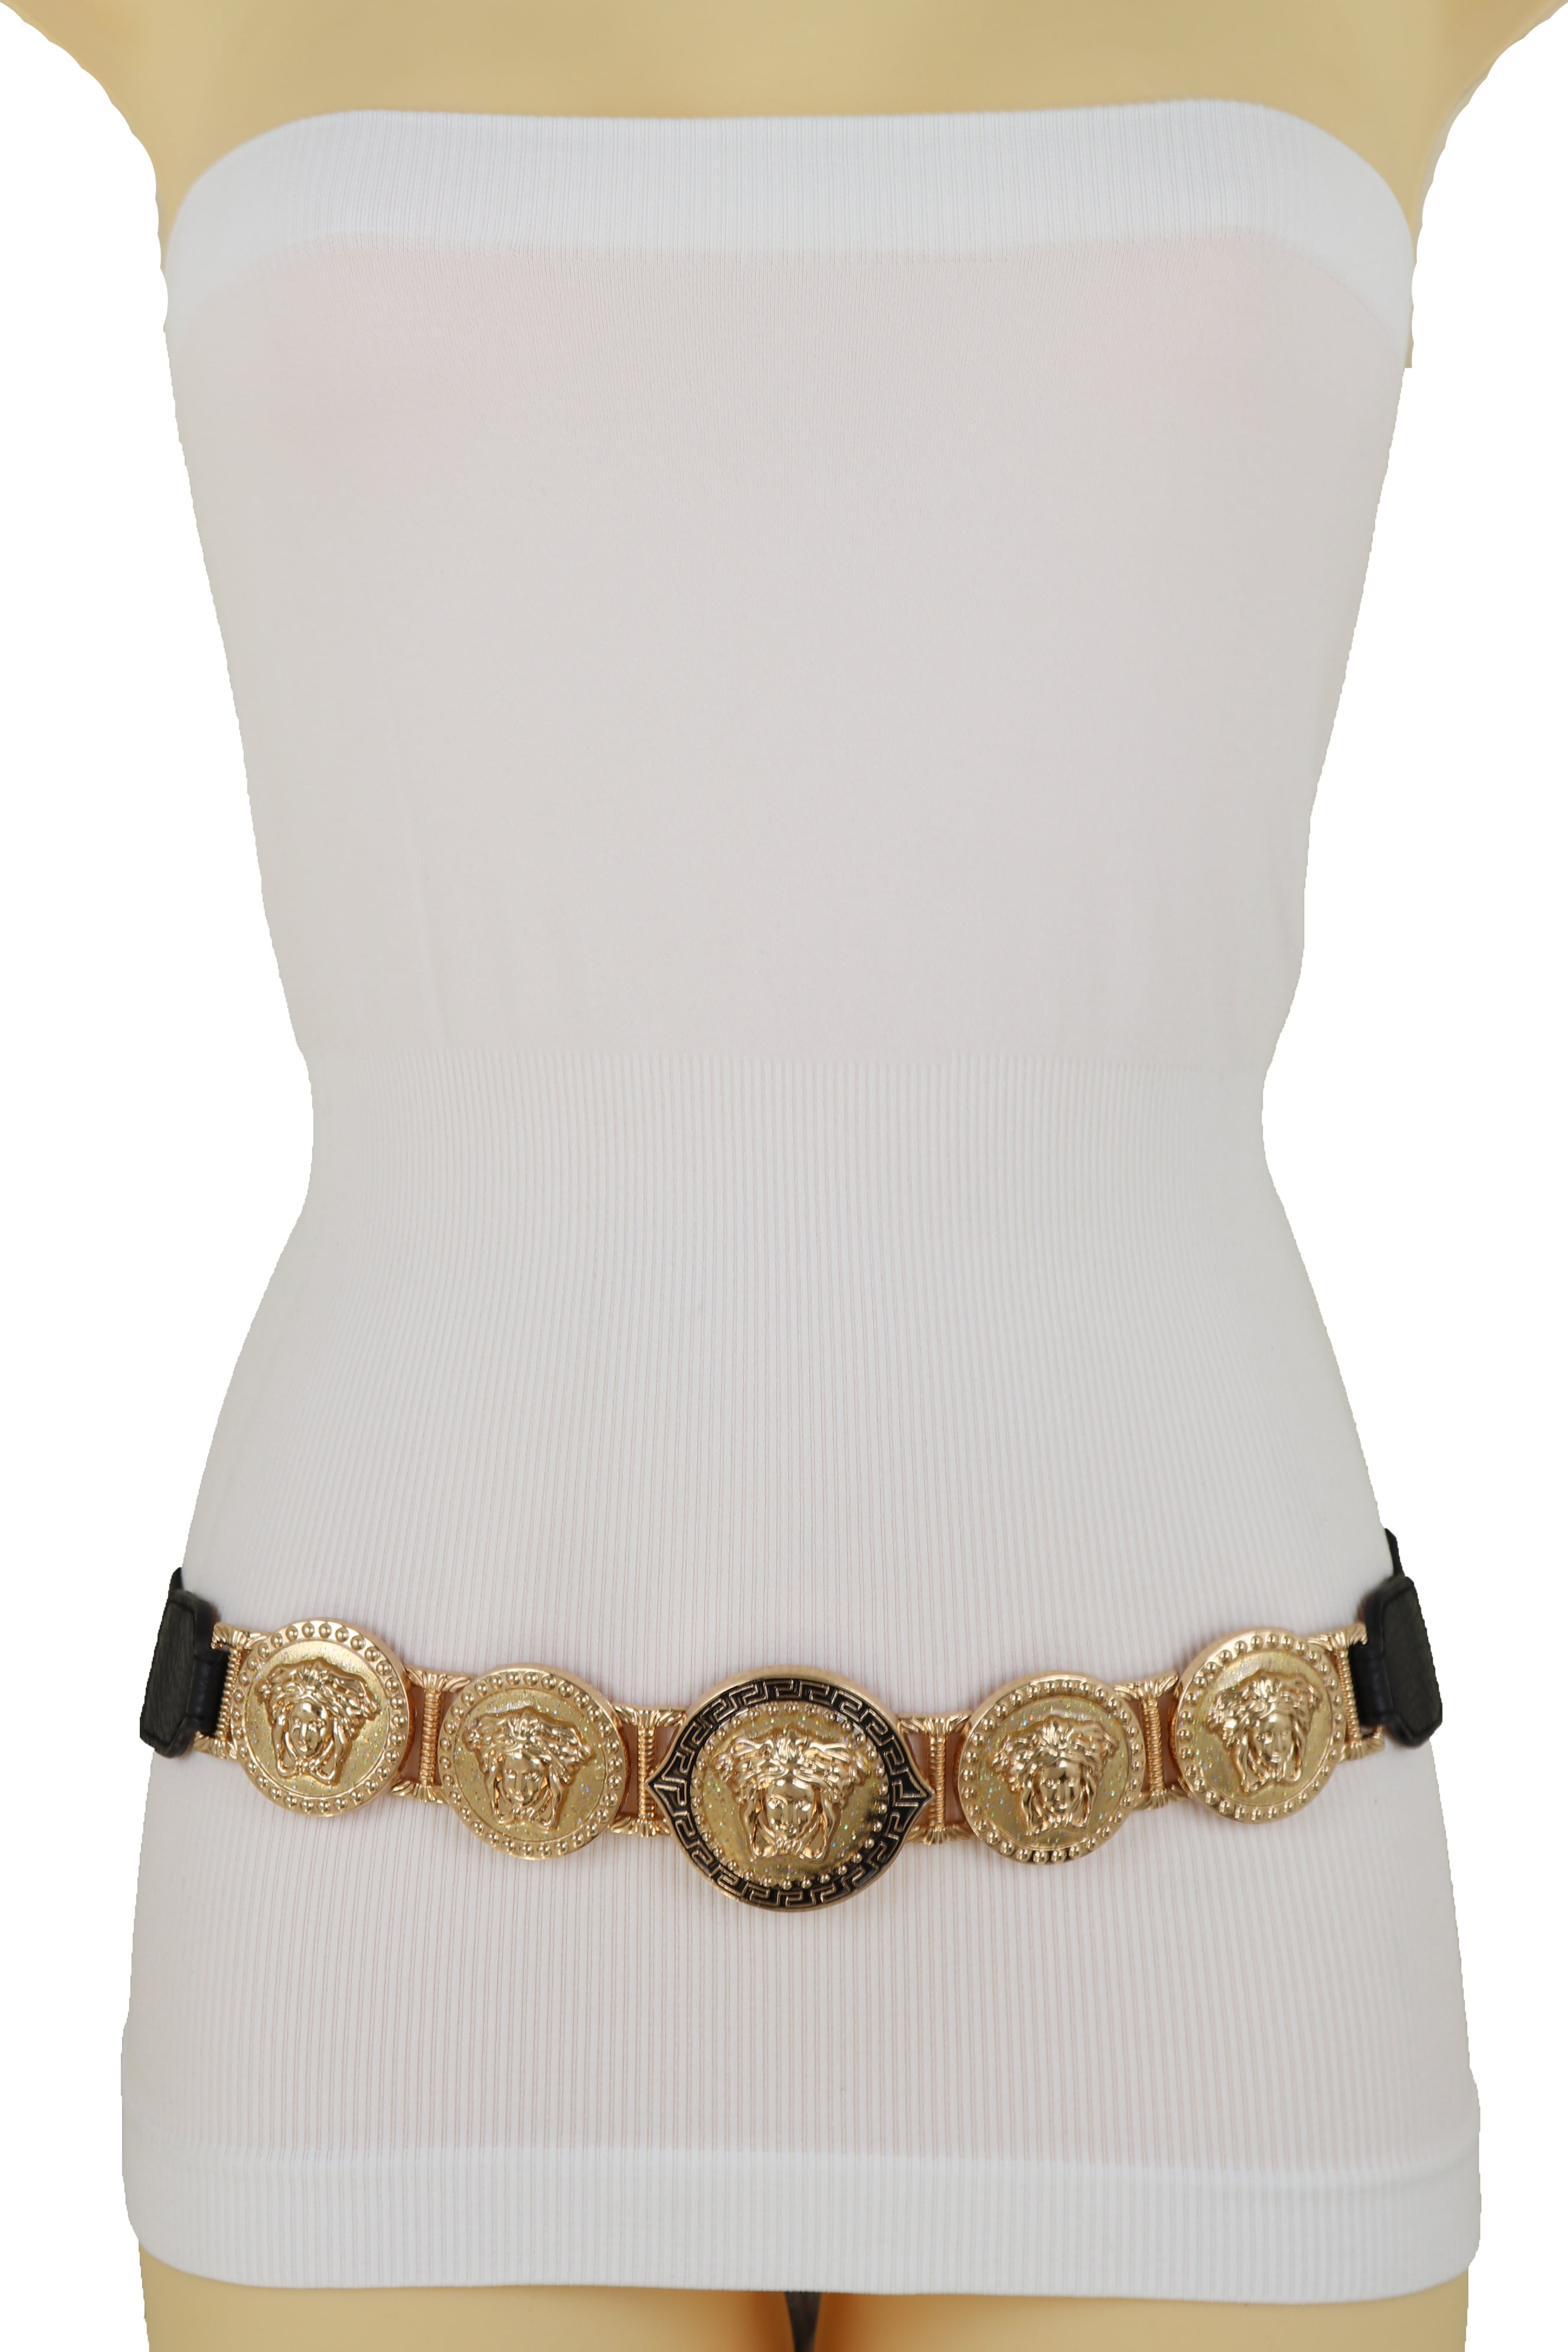 Women Fashion Belt Silver Metal Chain Ring Circles Charms Hip Waist Size XS S M 